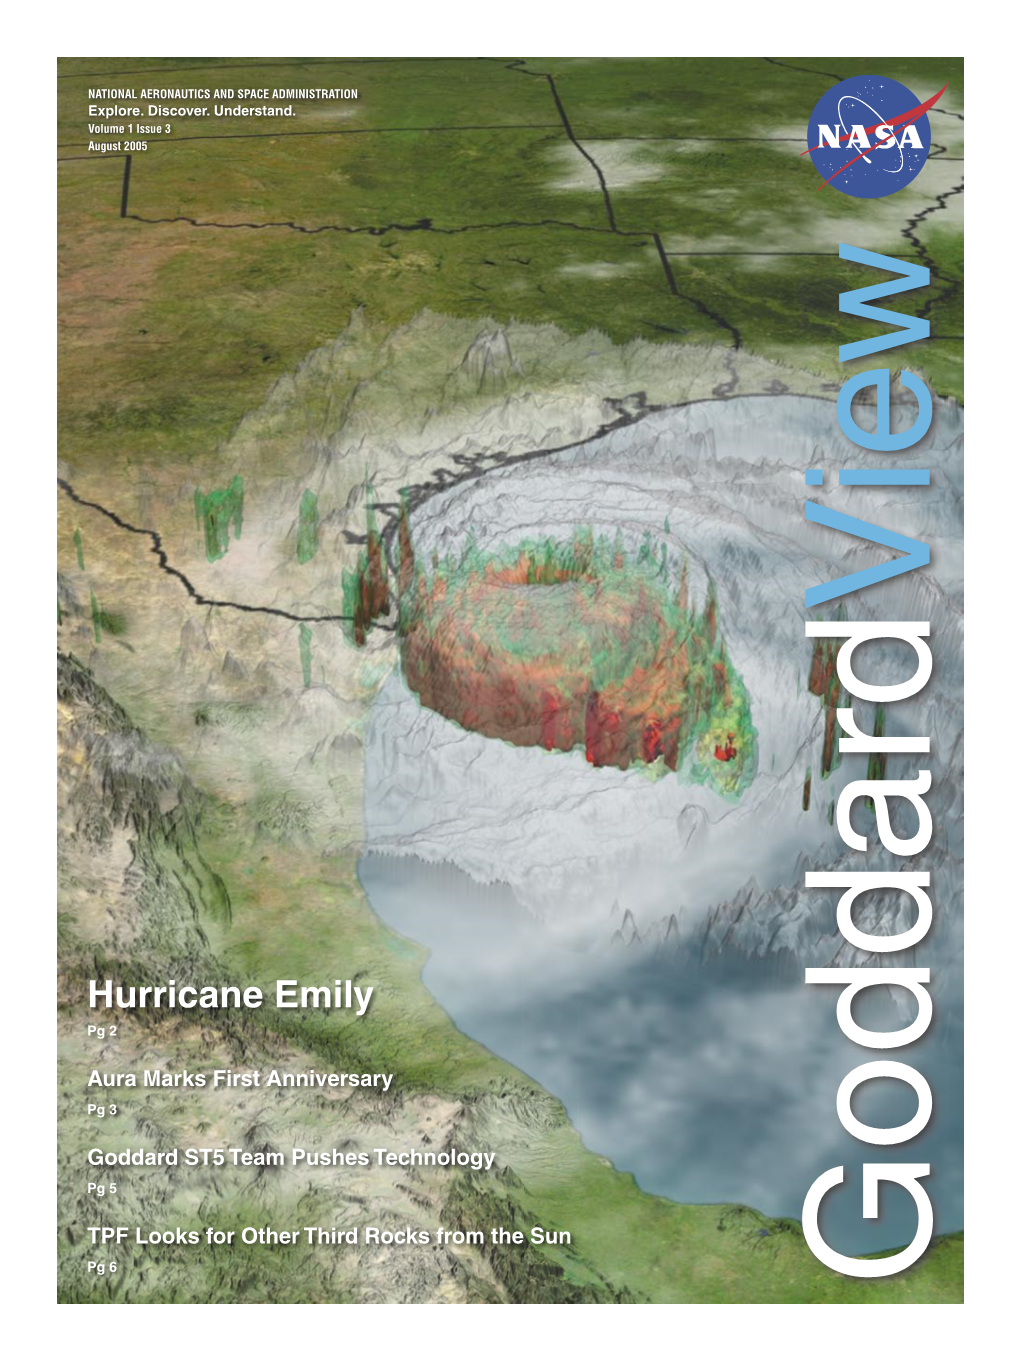 Hurricane Emily August 2005 Volume 1Issue3 Explore